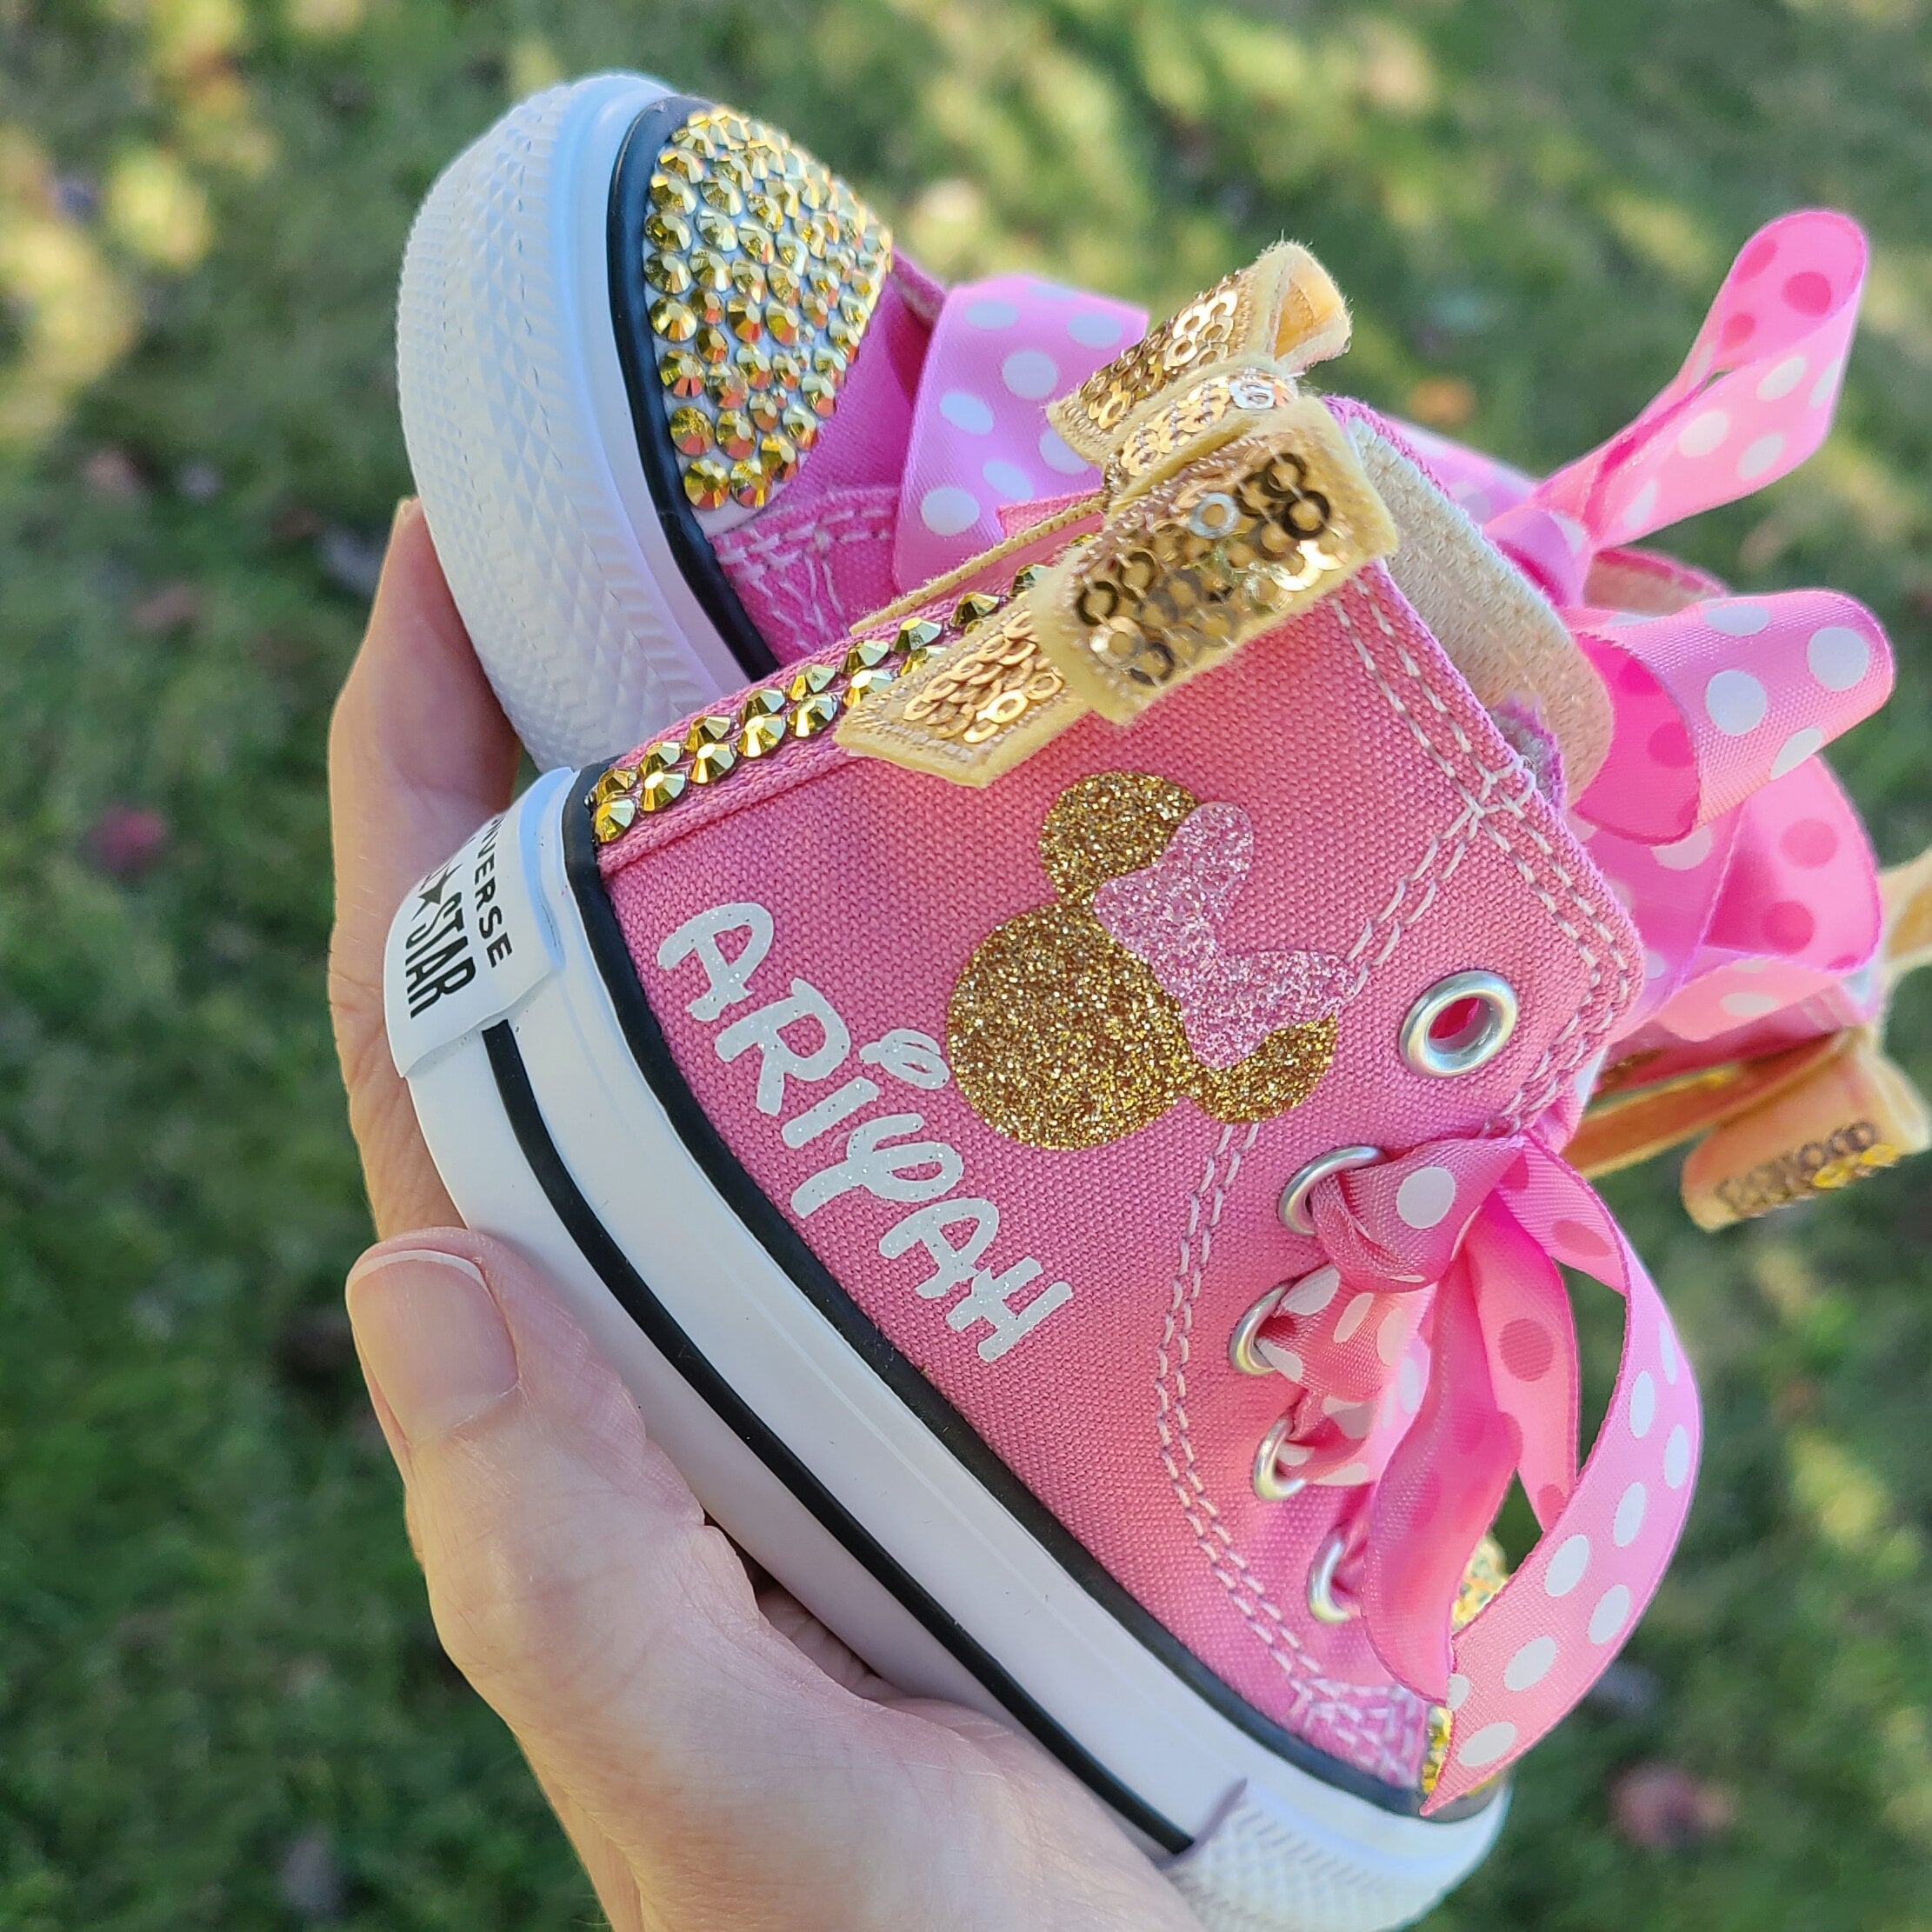 Personalized toddler shoes Baby Minnie Mouse Converse Schoenen Meisjesschoenen Sneakers & Sportschoenen pink or white high tops 